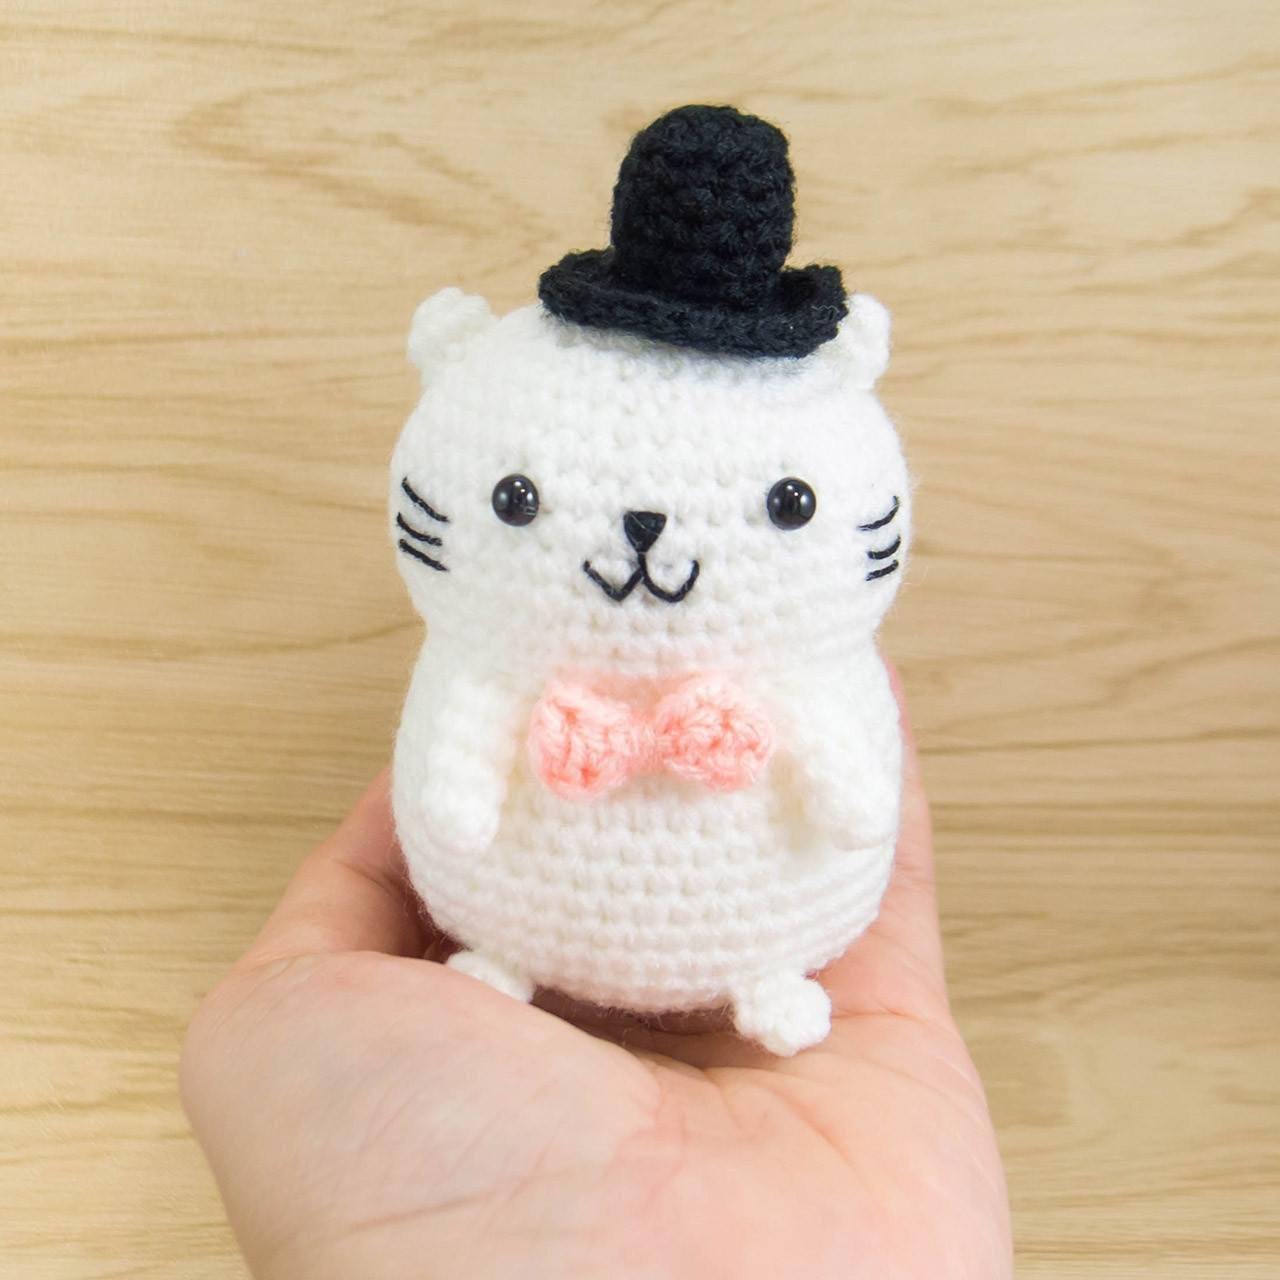 Crochet Cat Amigurumi with Bowtie